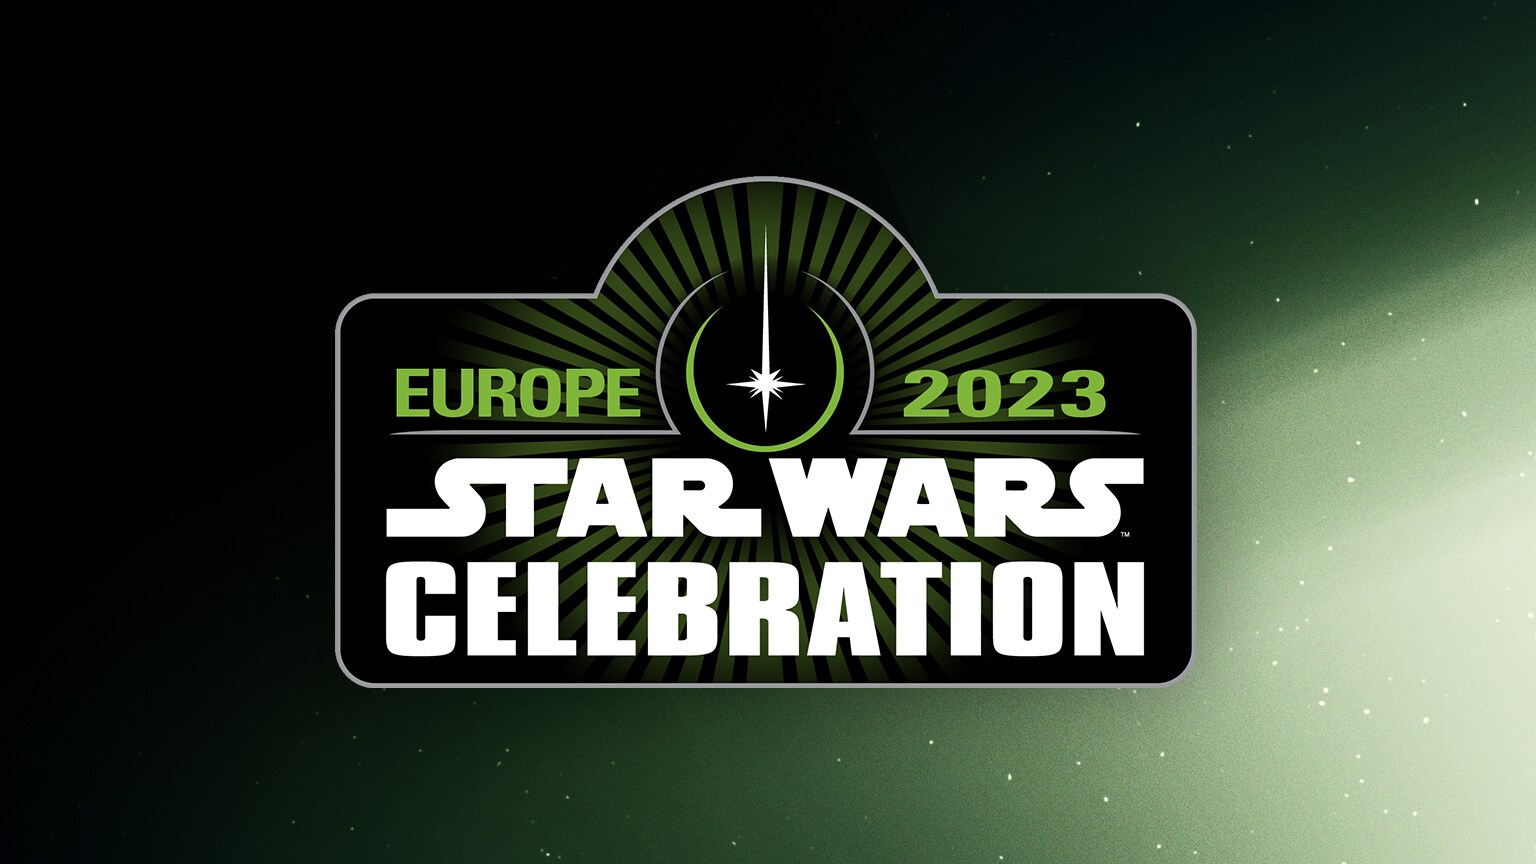 Star Wars Celebration Europe 2023 logo